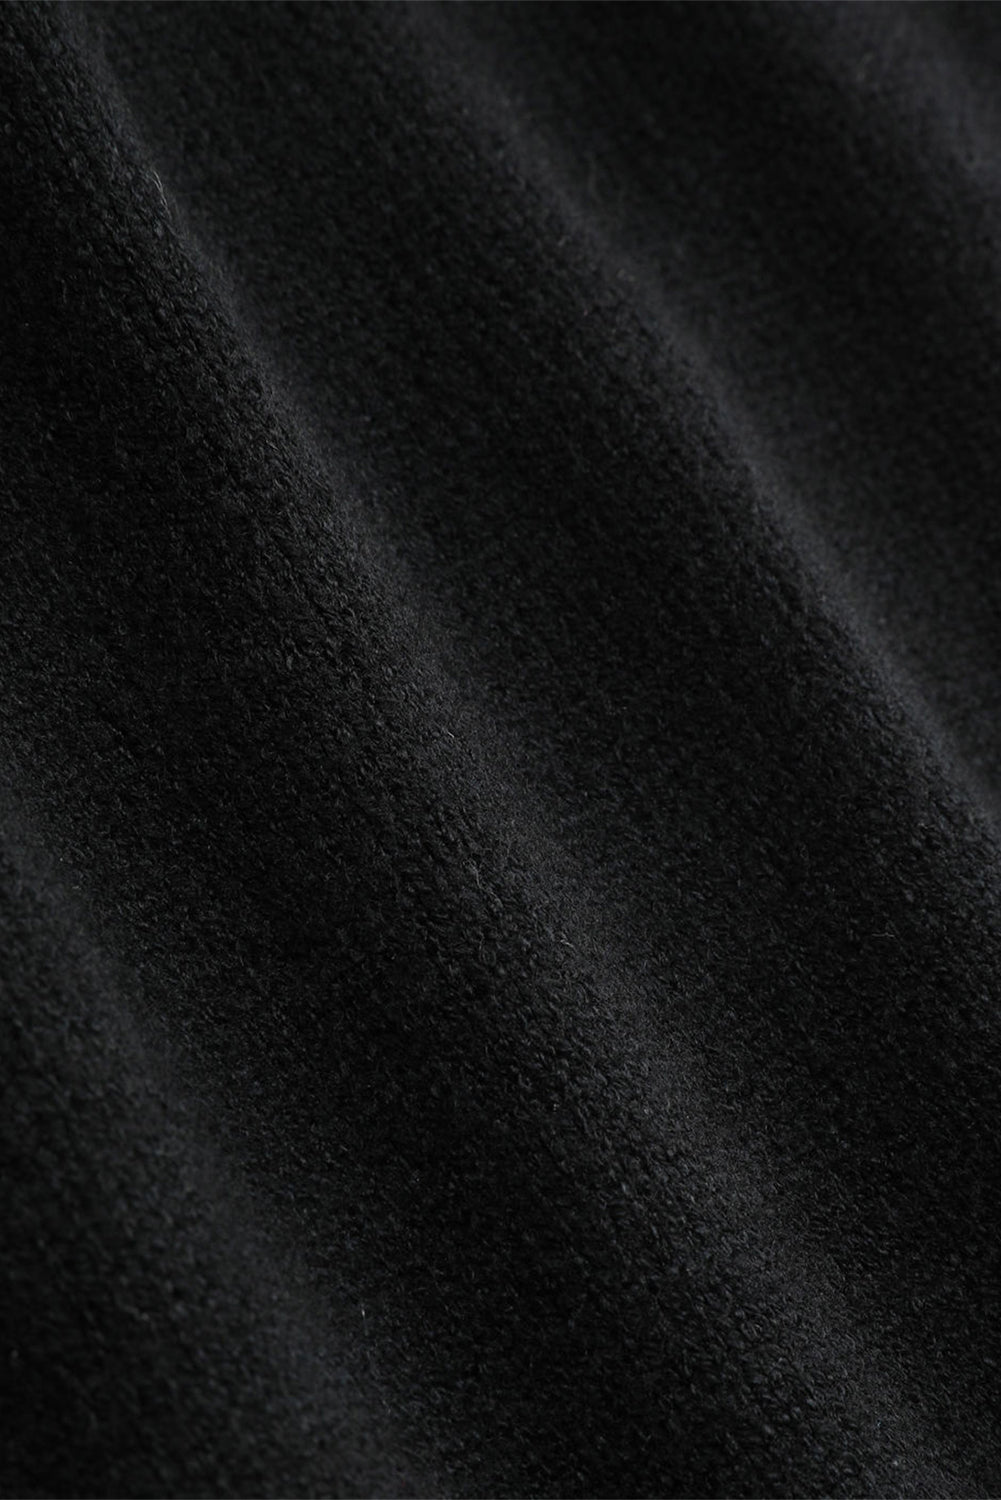 Black 3D Flower Decor Cropped Sweater Vest